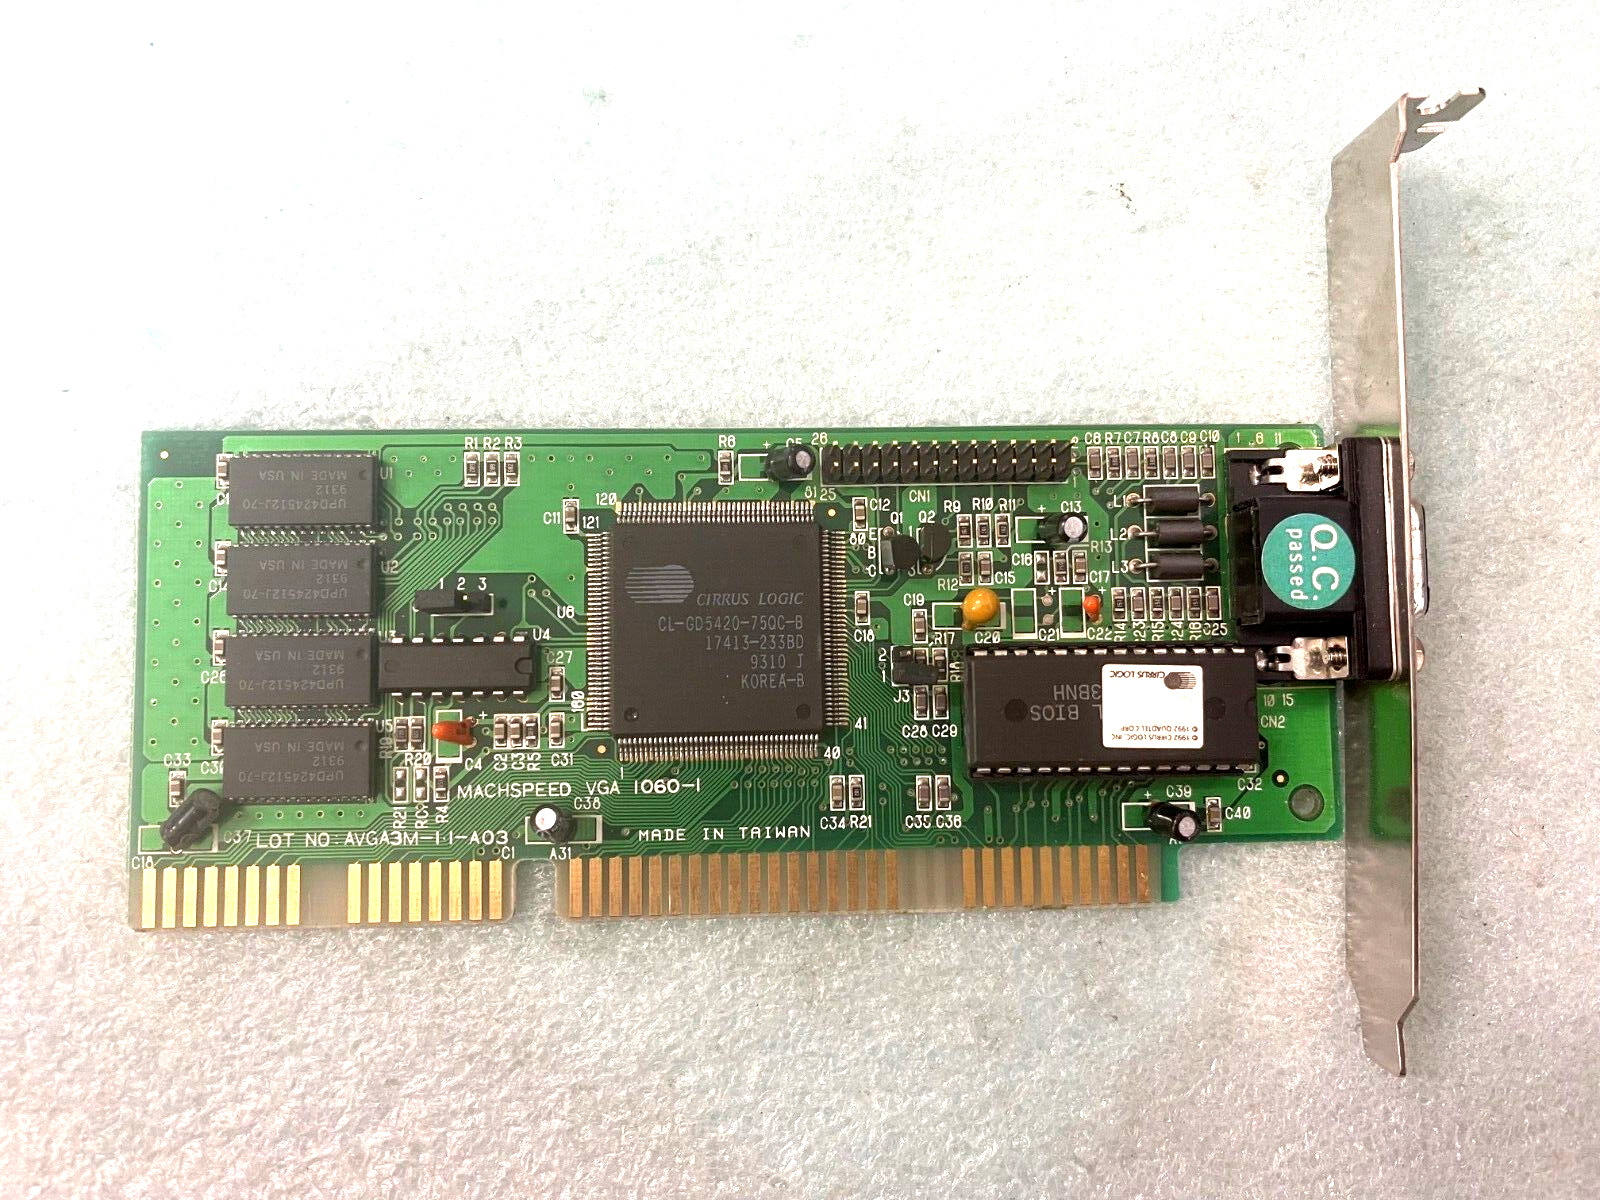 VINTAGE 1993 MACHSPEED CIRRUS LOGIC CL-GD5420-750QC-B 512K ISA VGA CARD MXB36